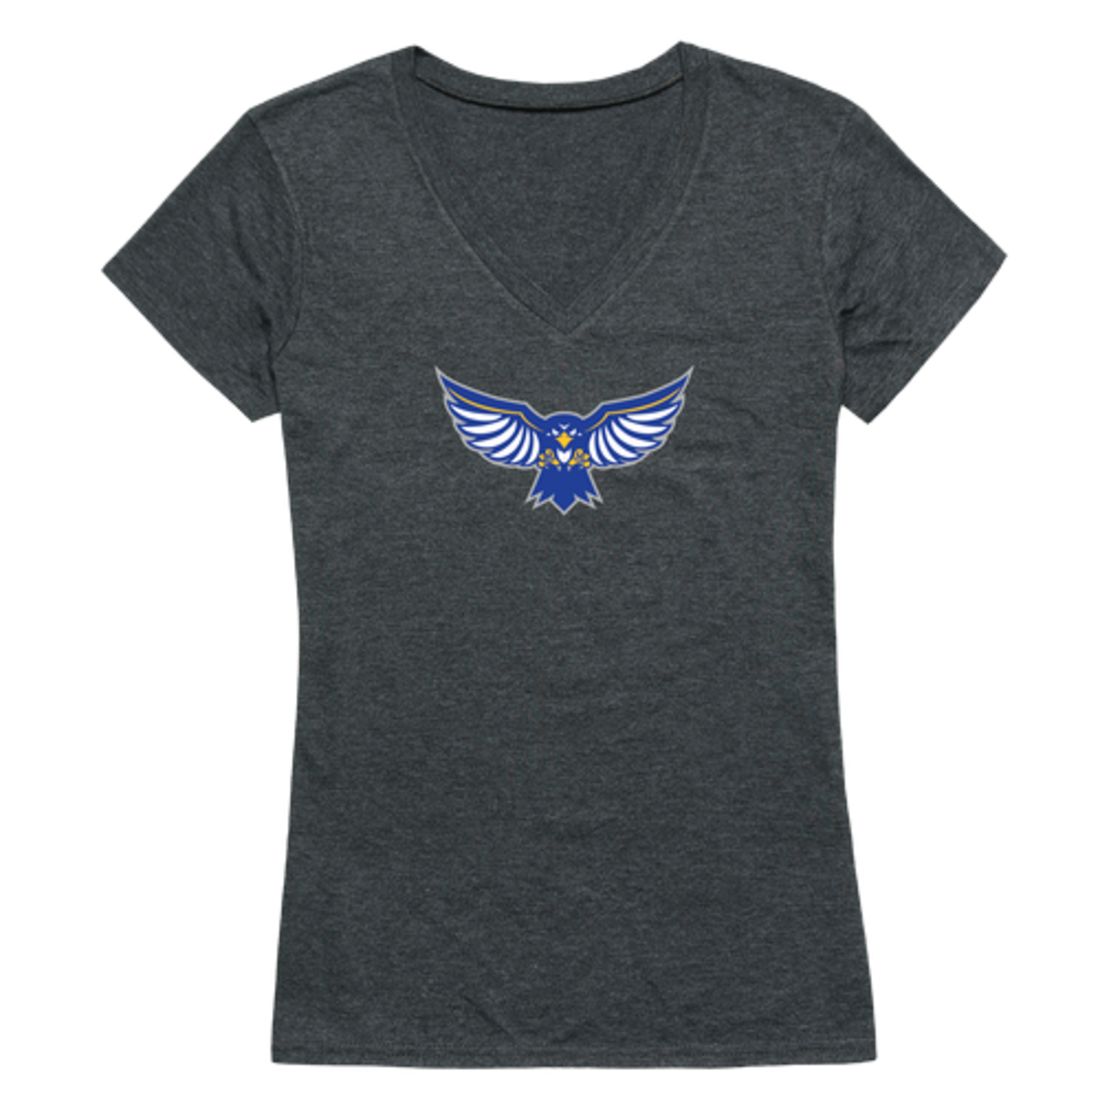 Hilbert College Hawks Womens Cinder T-Shirt Tee